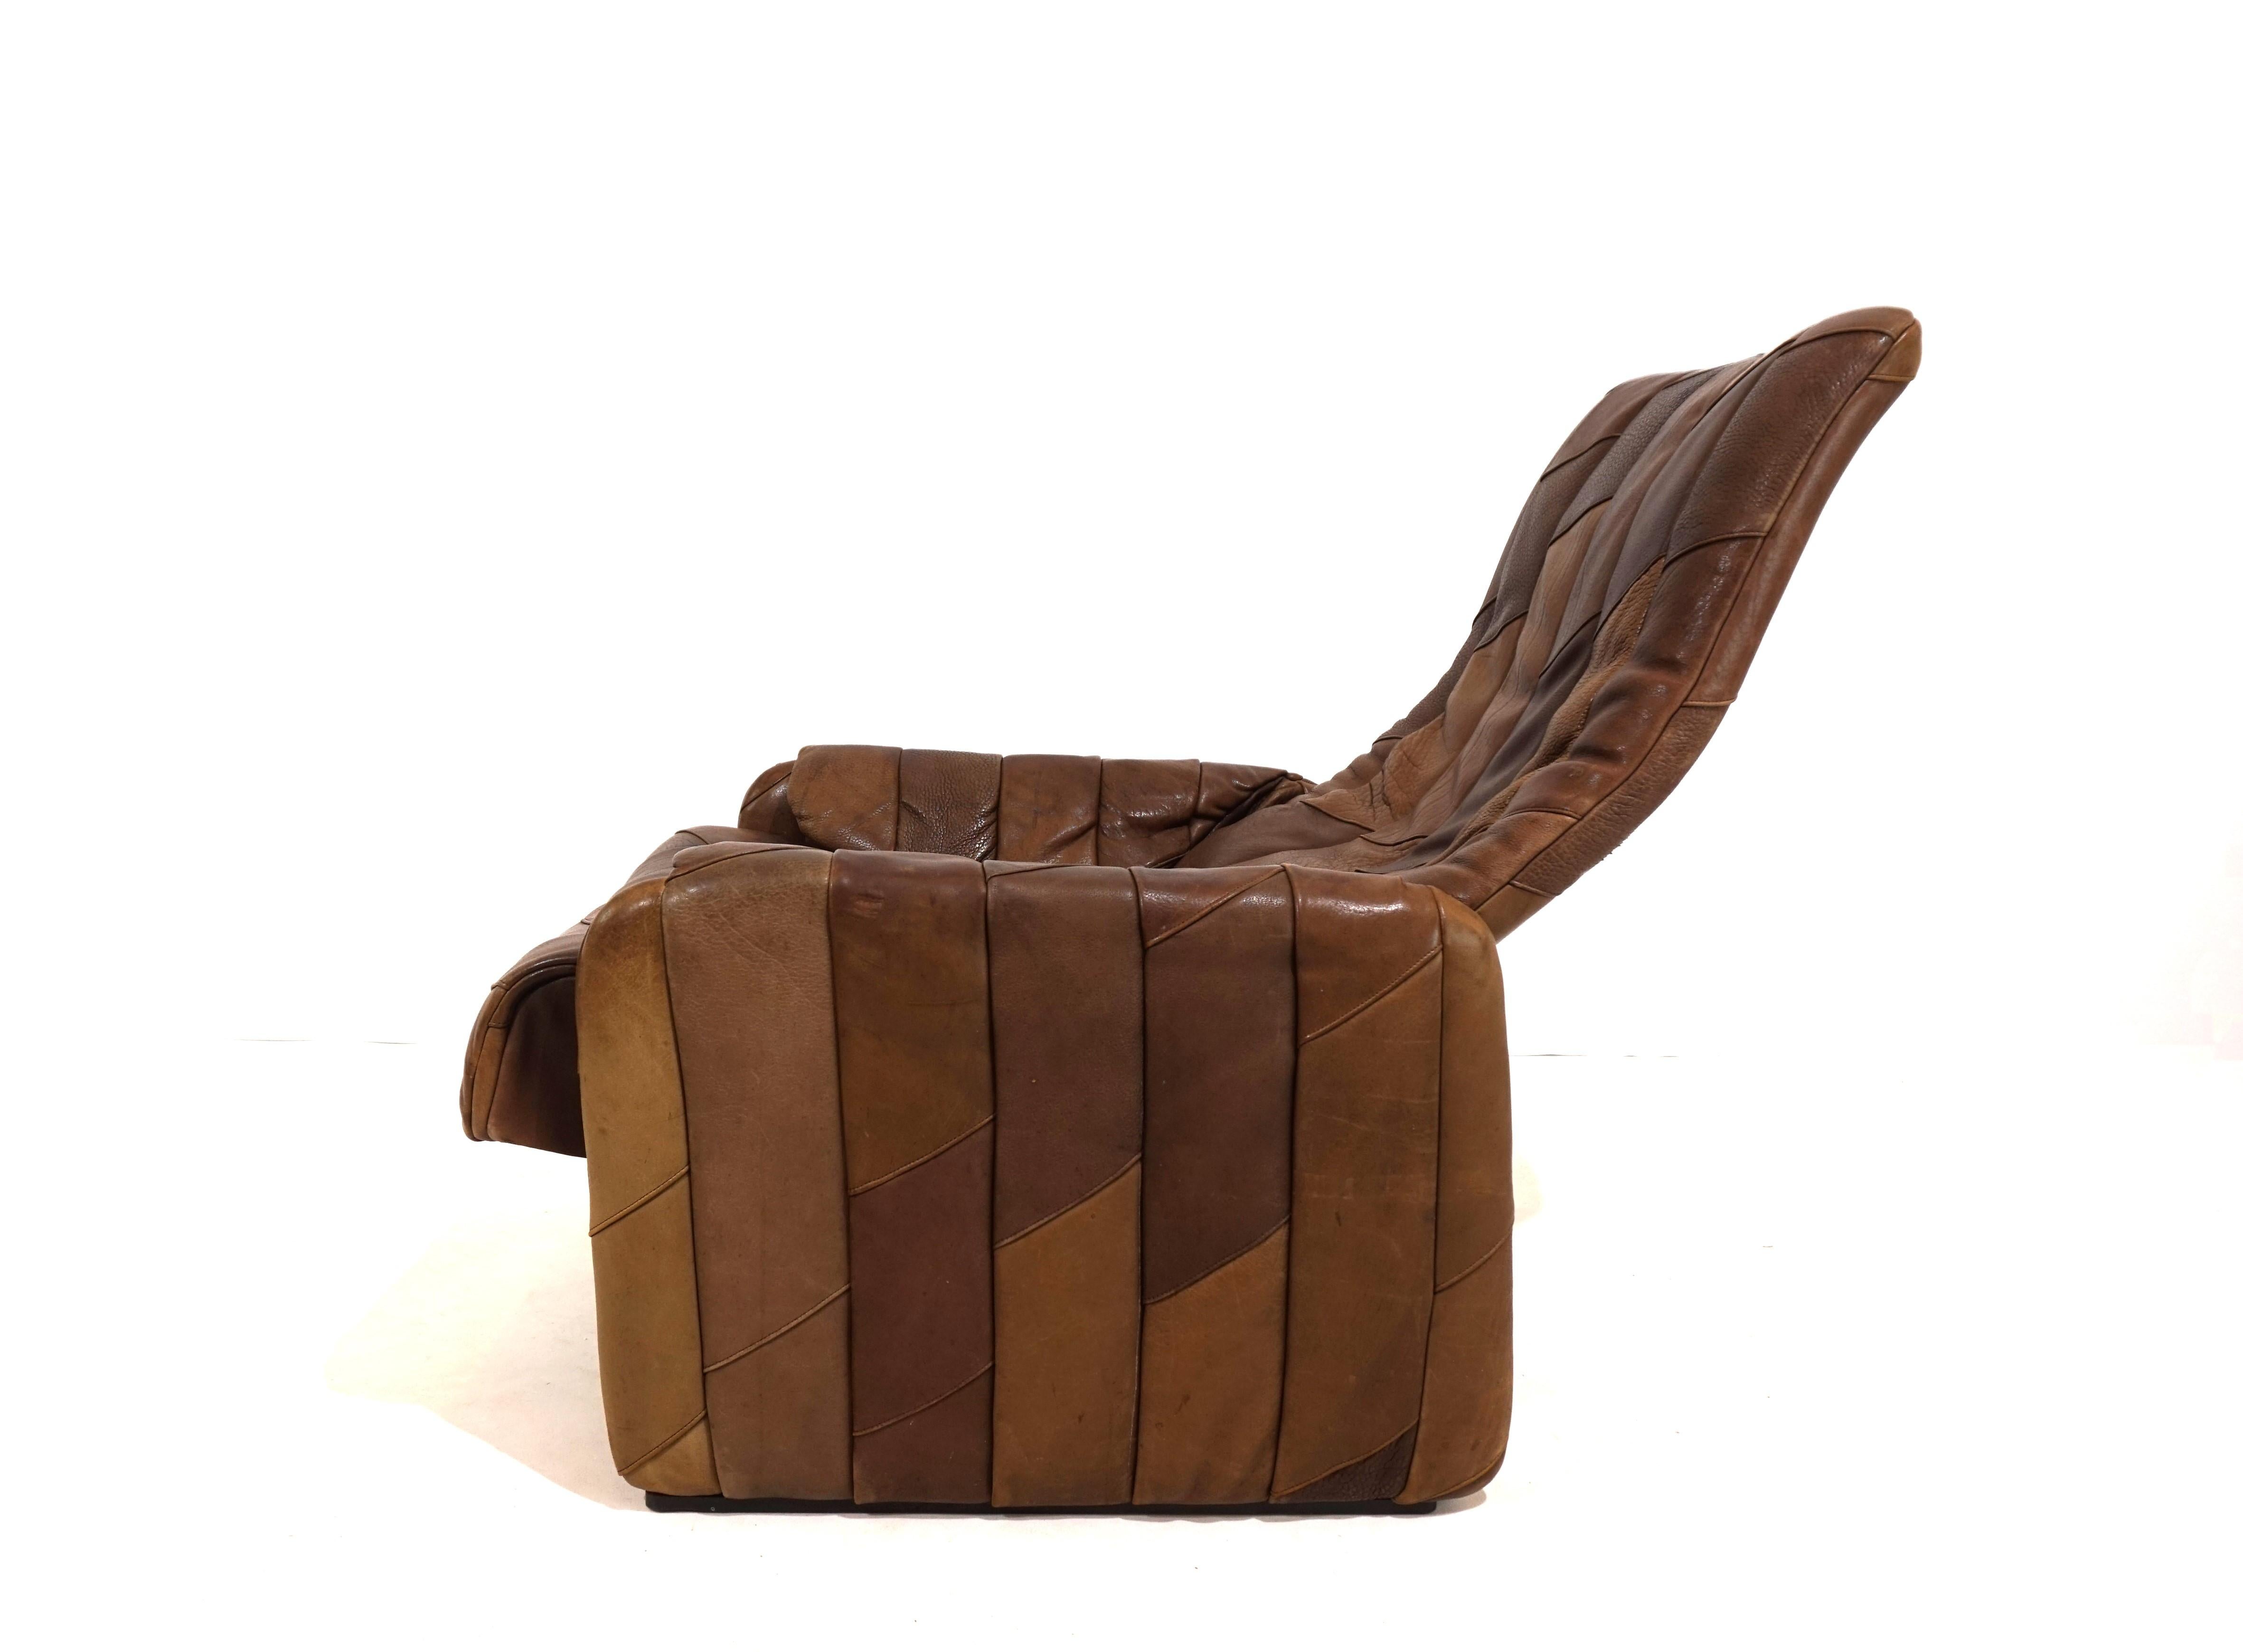 Swiss De Sede DS 50 patchwork leather armchair For Sale